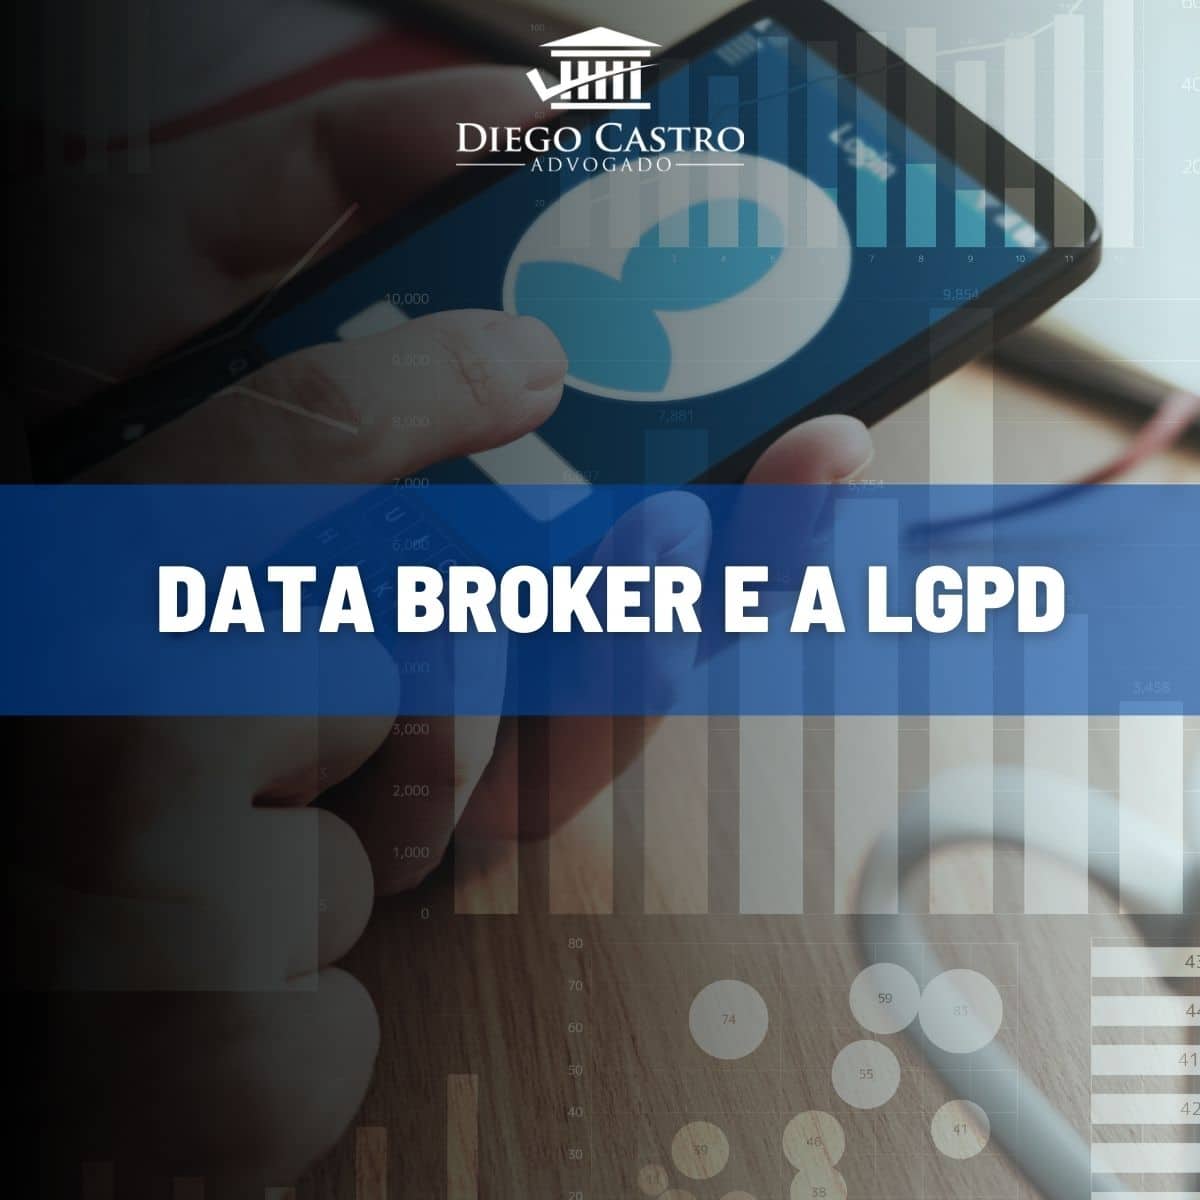 Data Broker e a LGPD